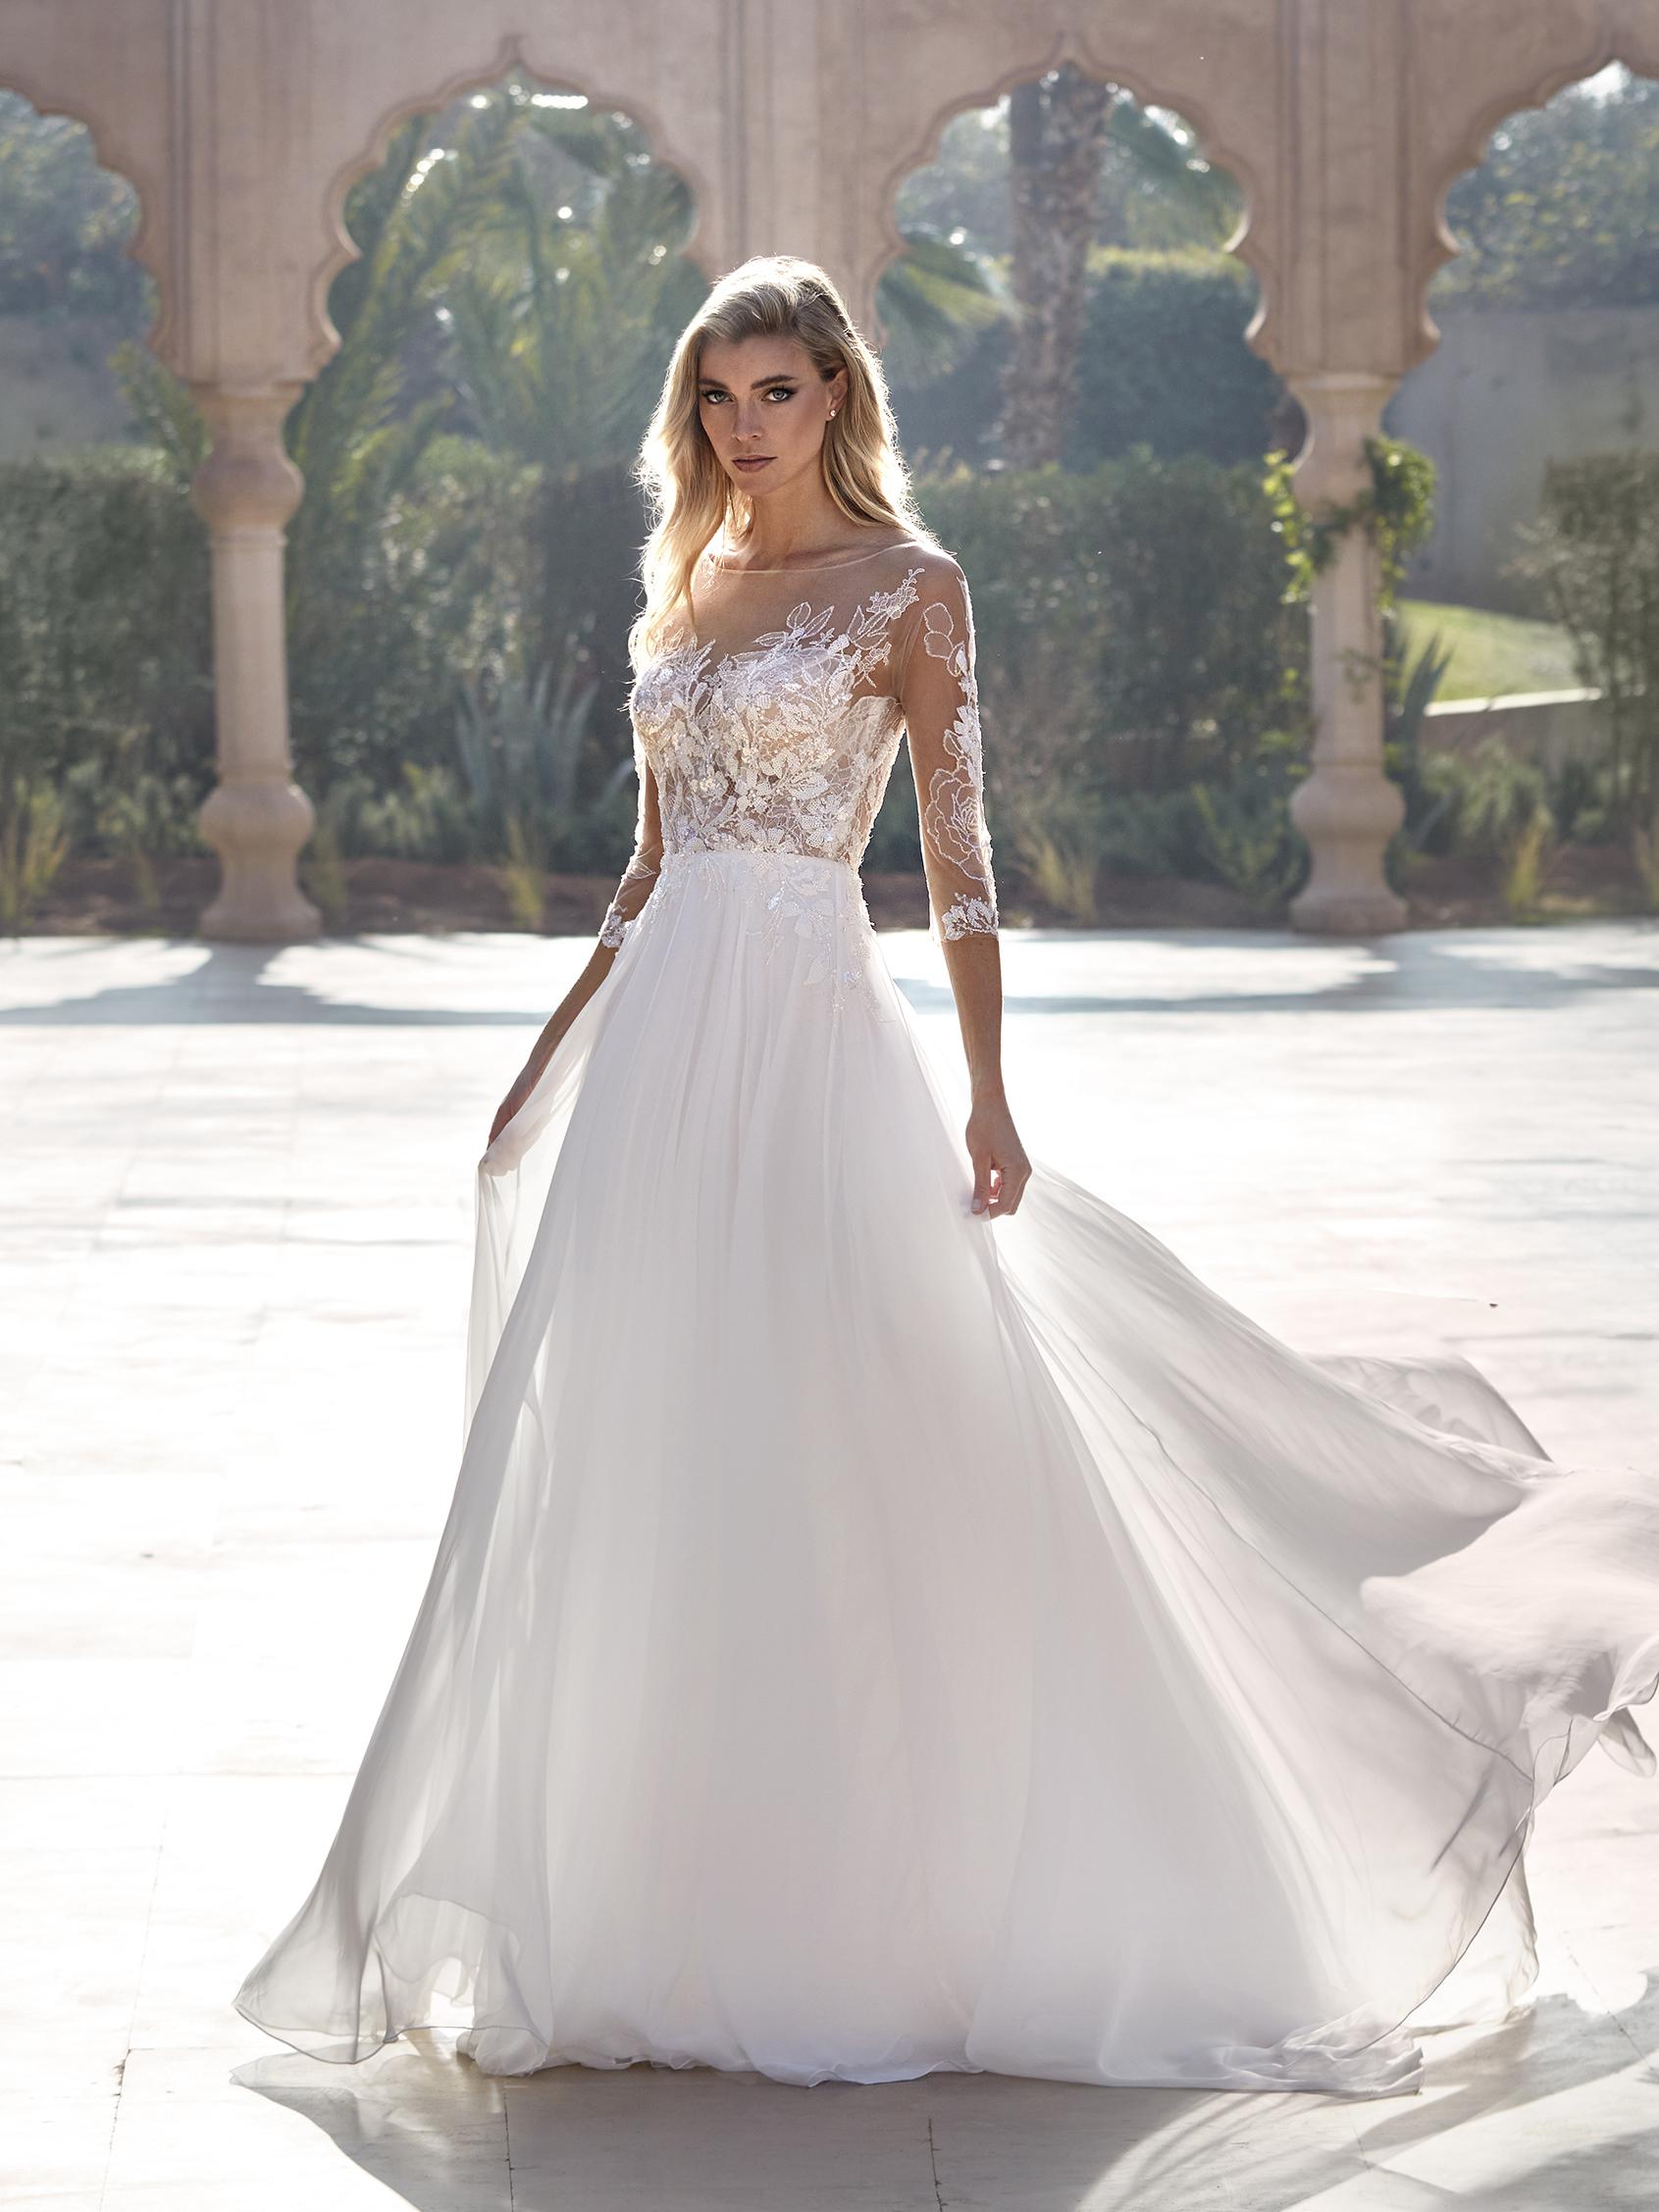 20 French Wedding Dress Designers French Brides Swear By